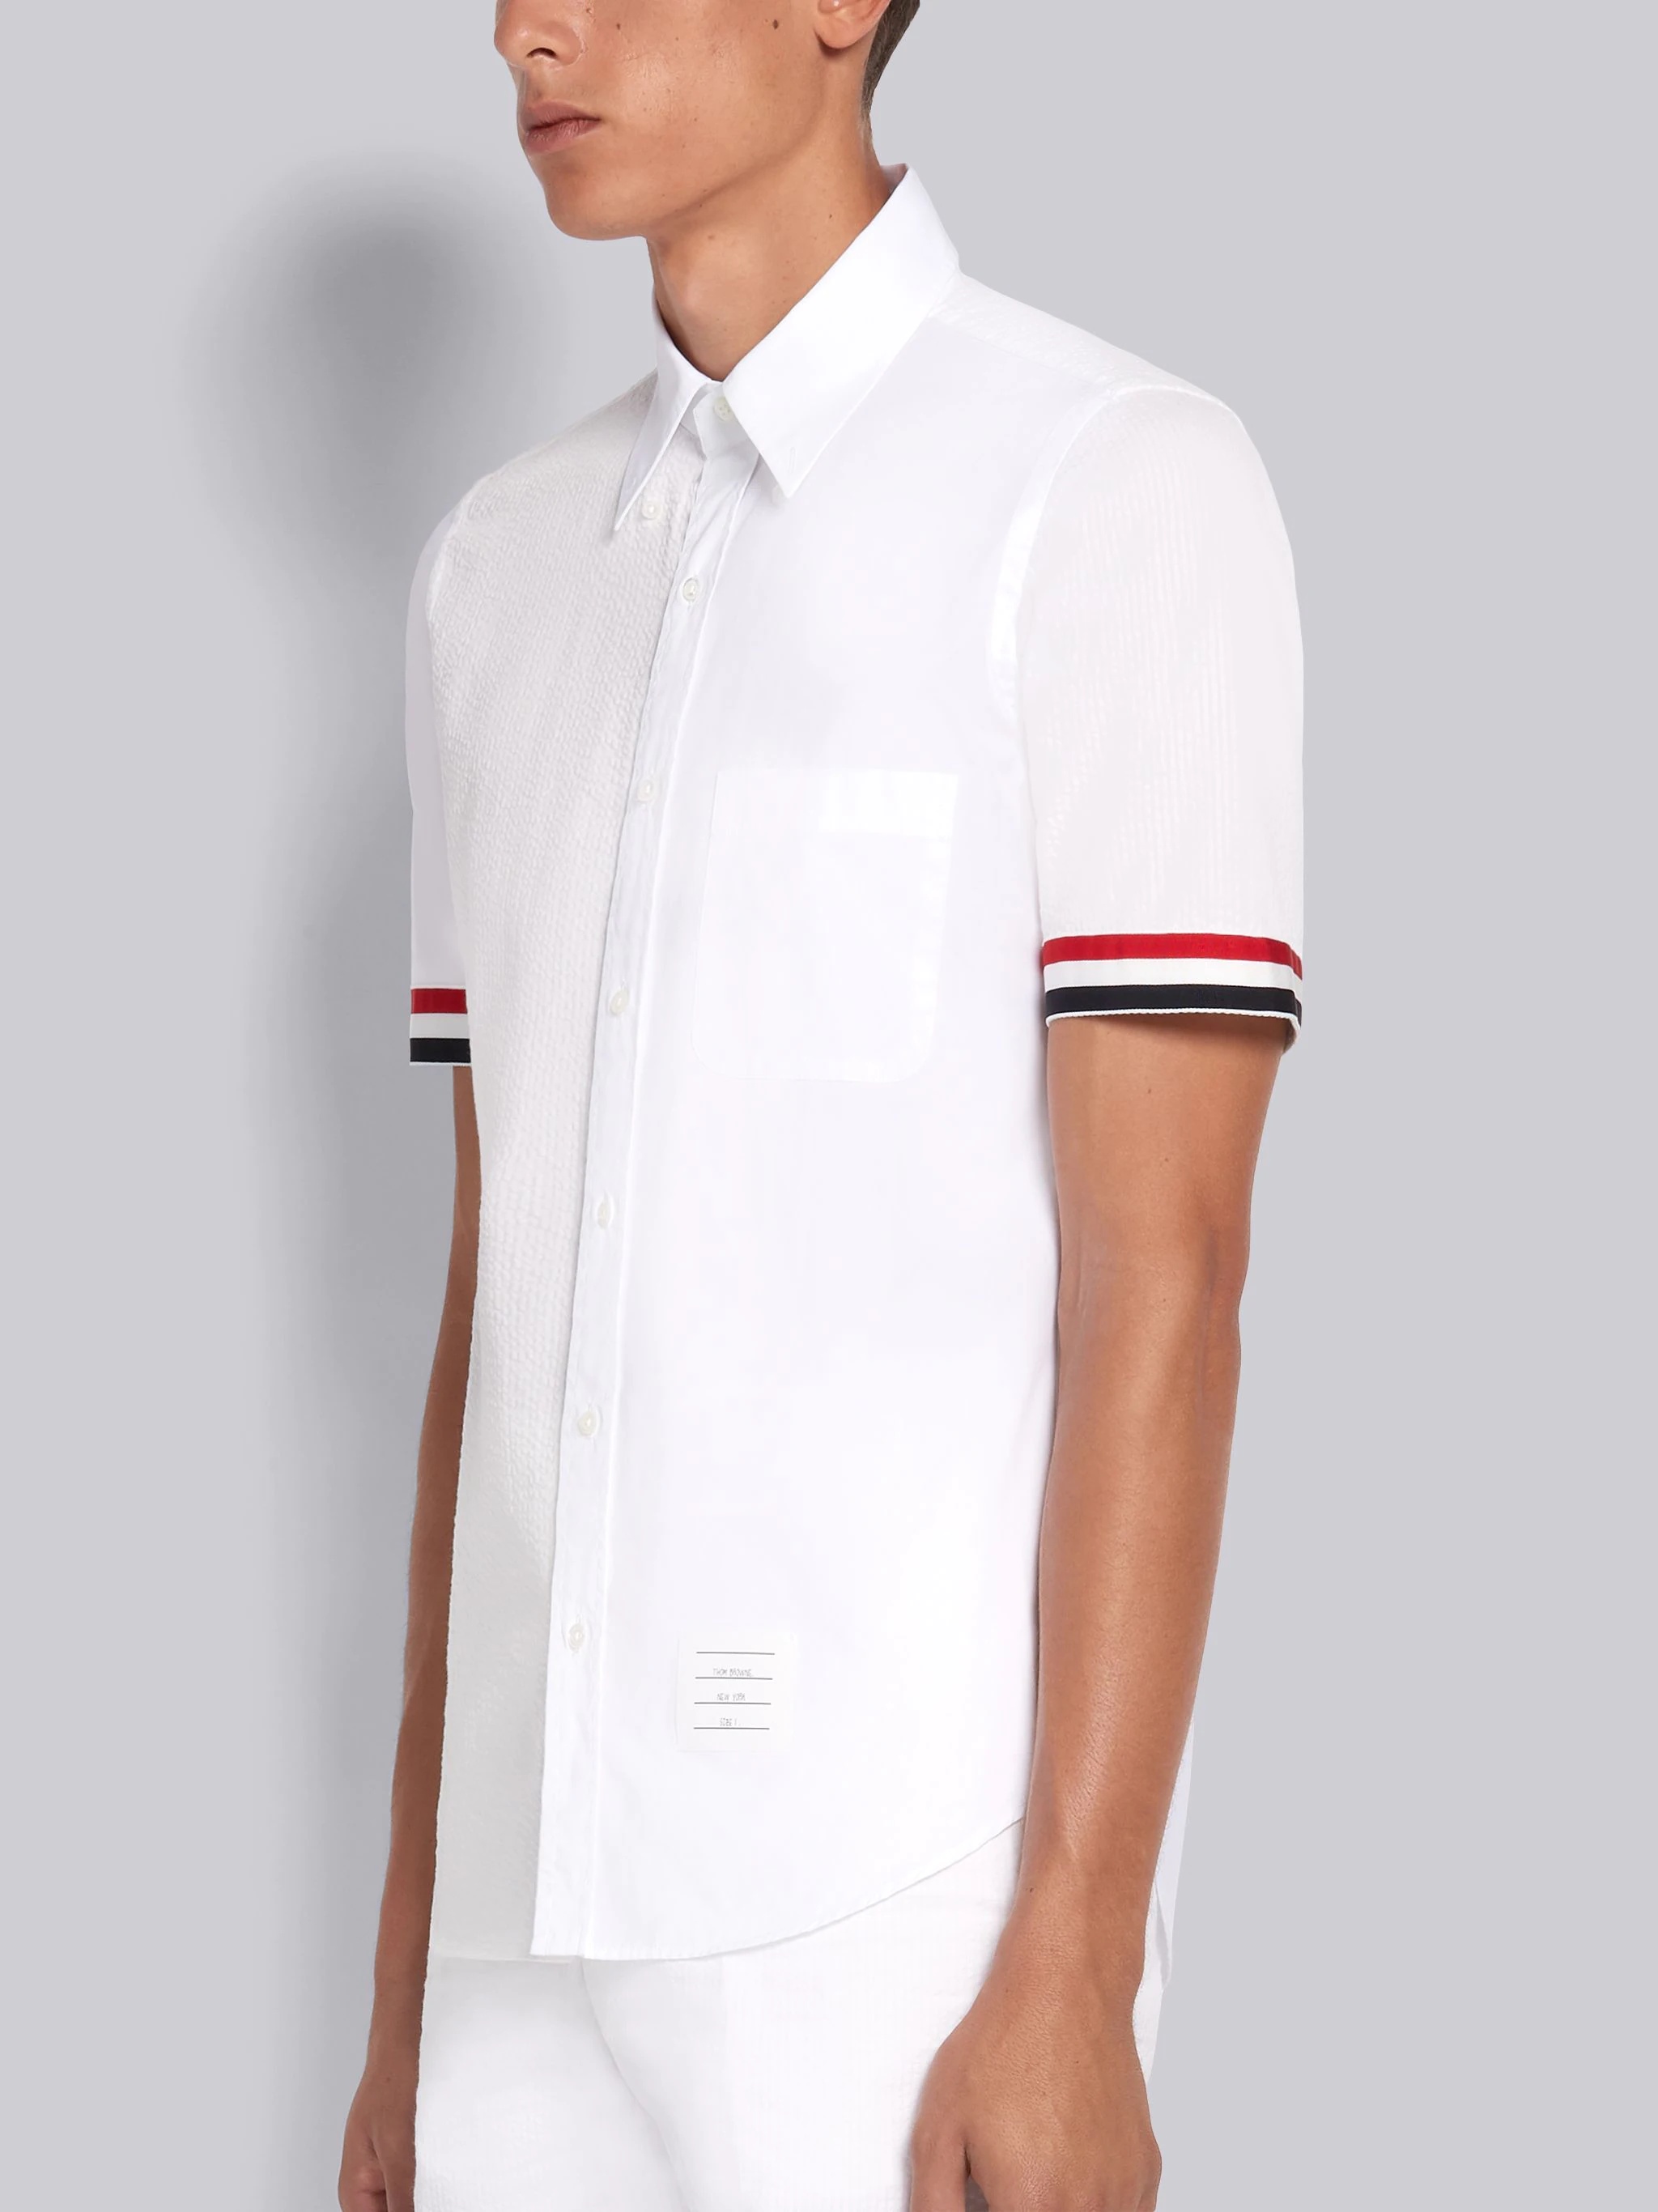 White Fun-Mix Cotton Seersucker Grosgrain Cuff Straight Fit Short Sleeve Shirt - 2